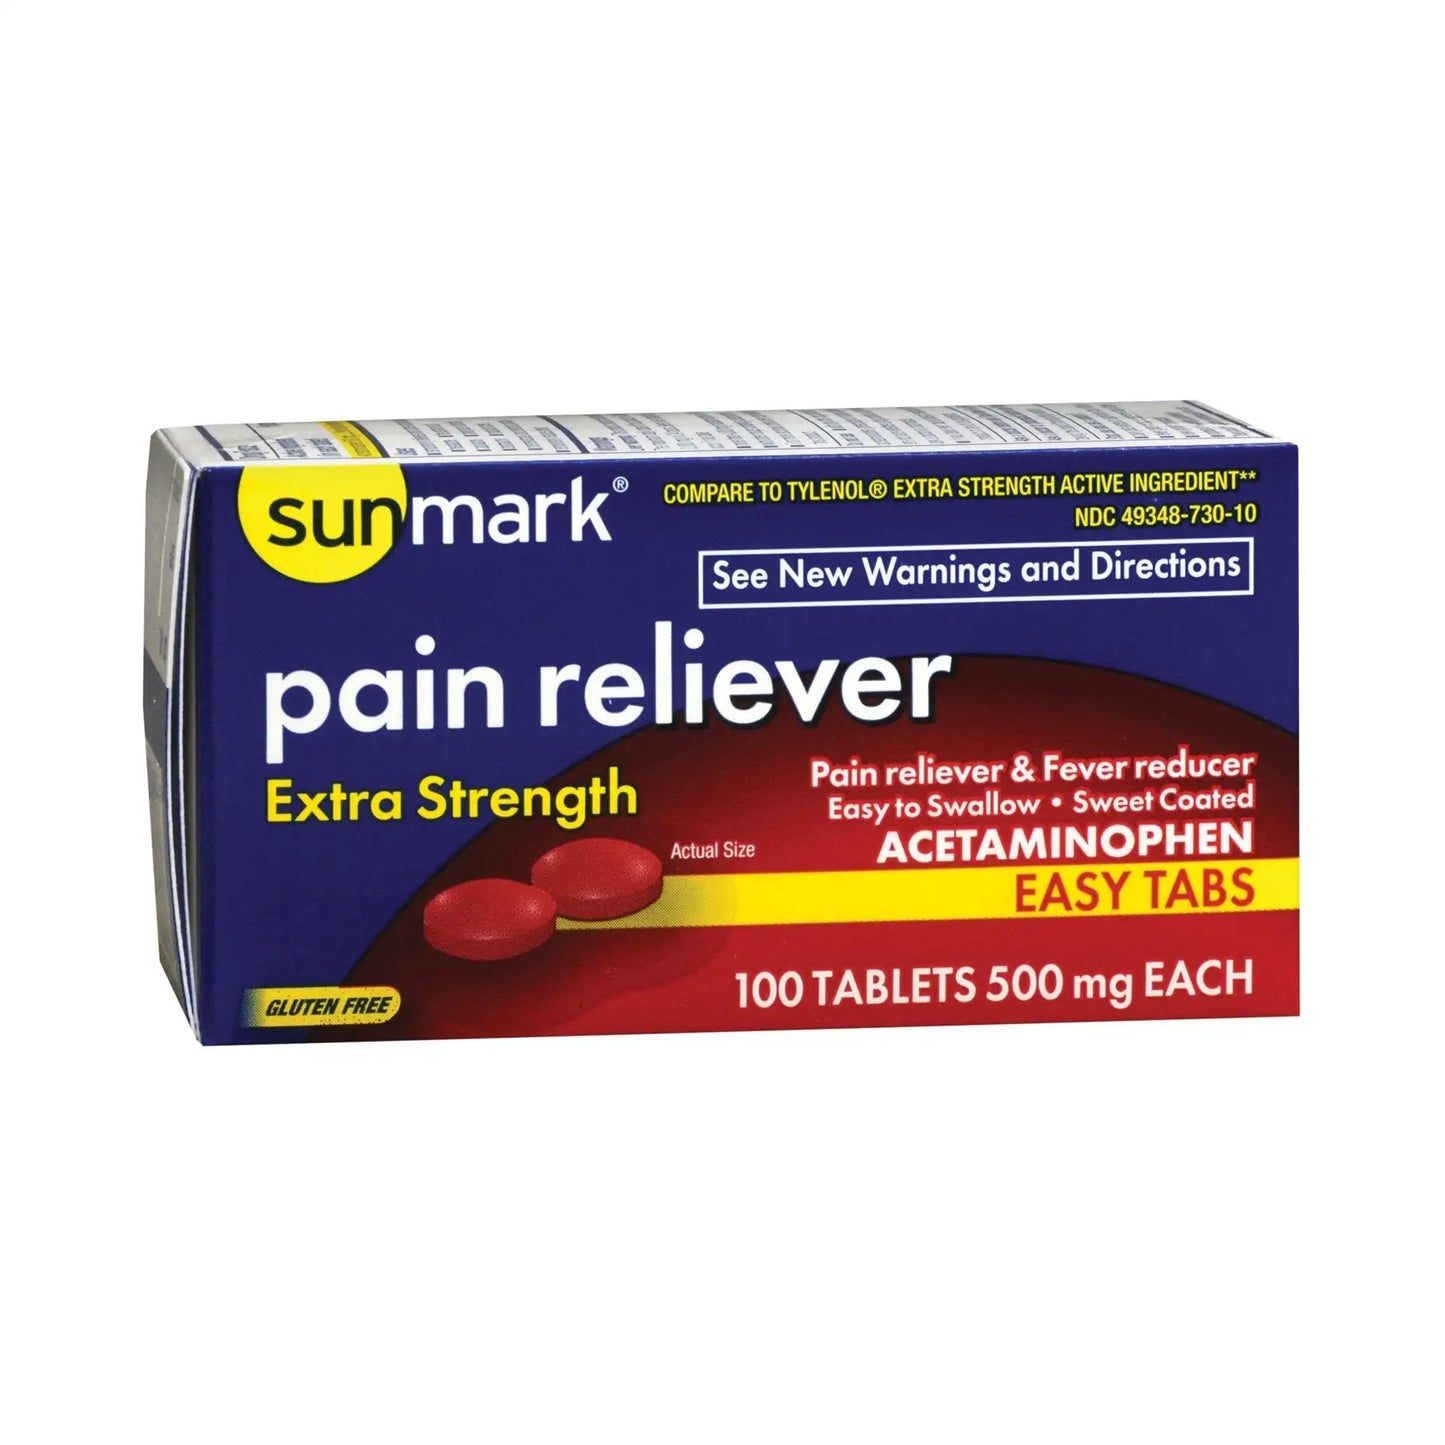 sunmark Acetaminophen Pain Relief, 100 Tablets per Bottle